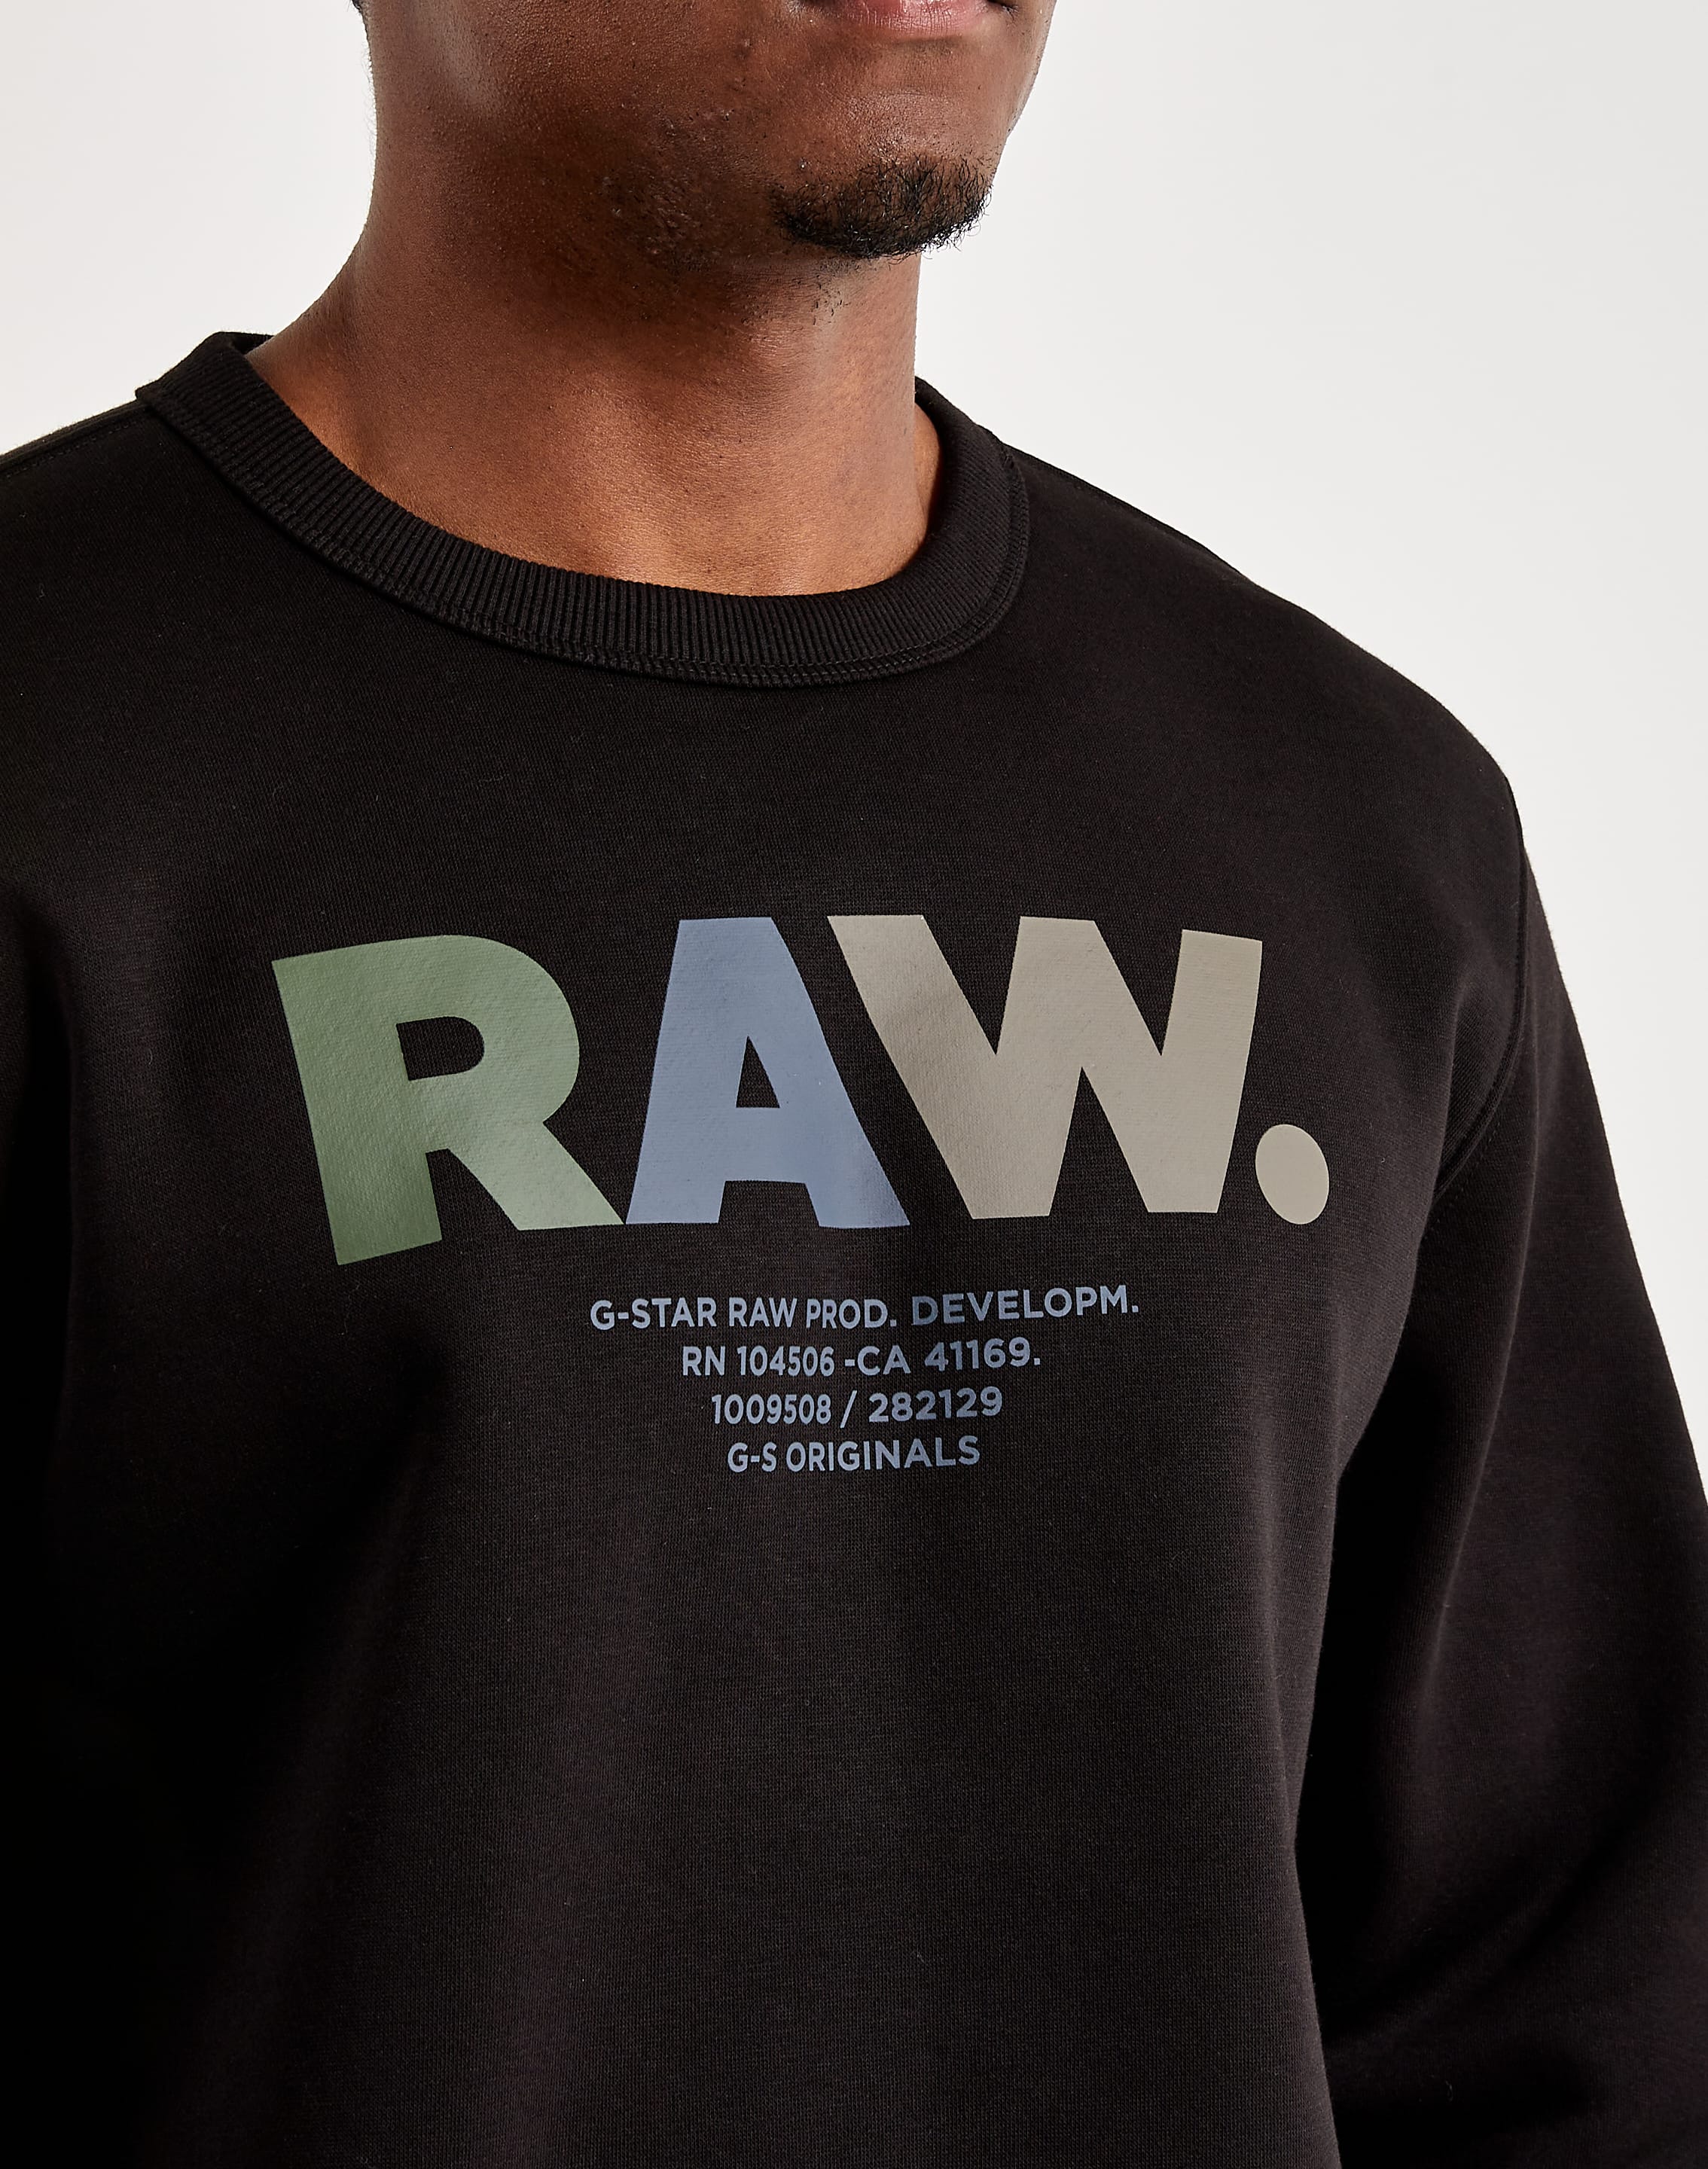 – Crewneck G-Star DTLR Raw Sweatshirt Multicolored